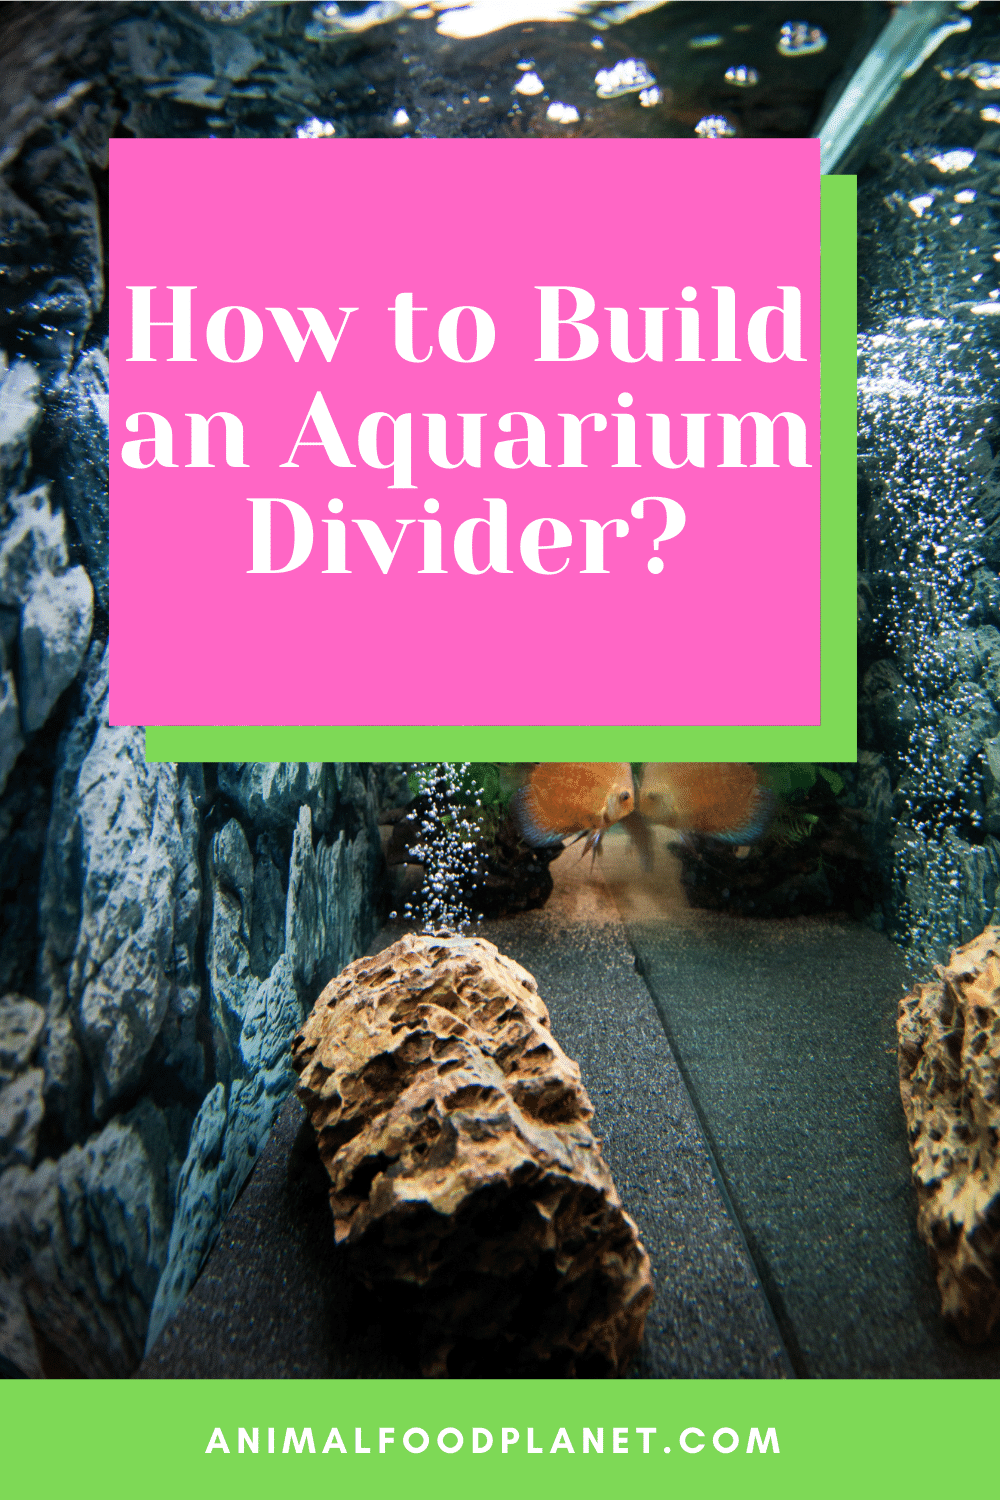 How to Build an Aquarium Divider?